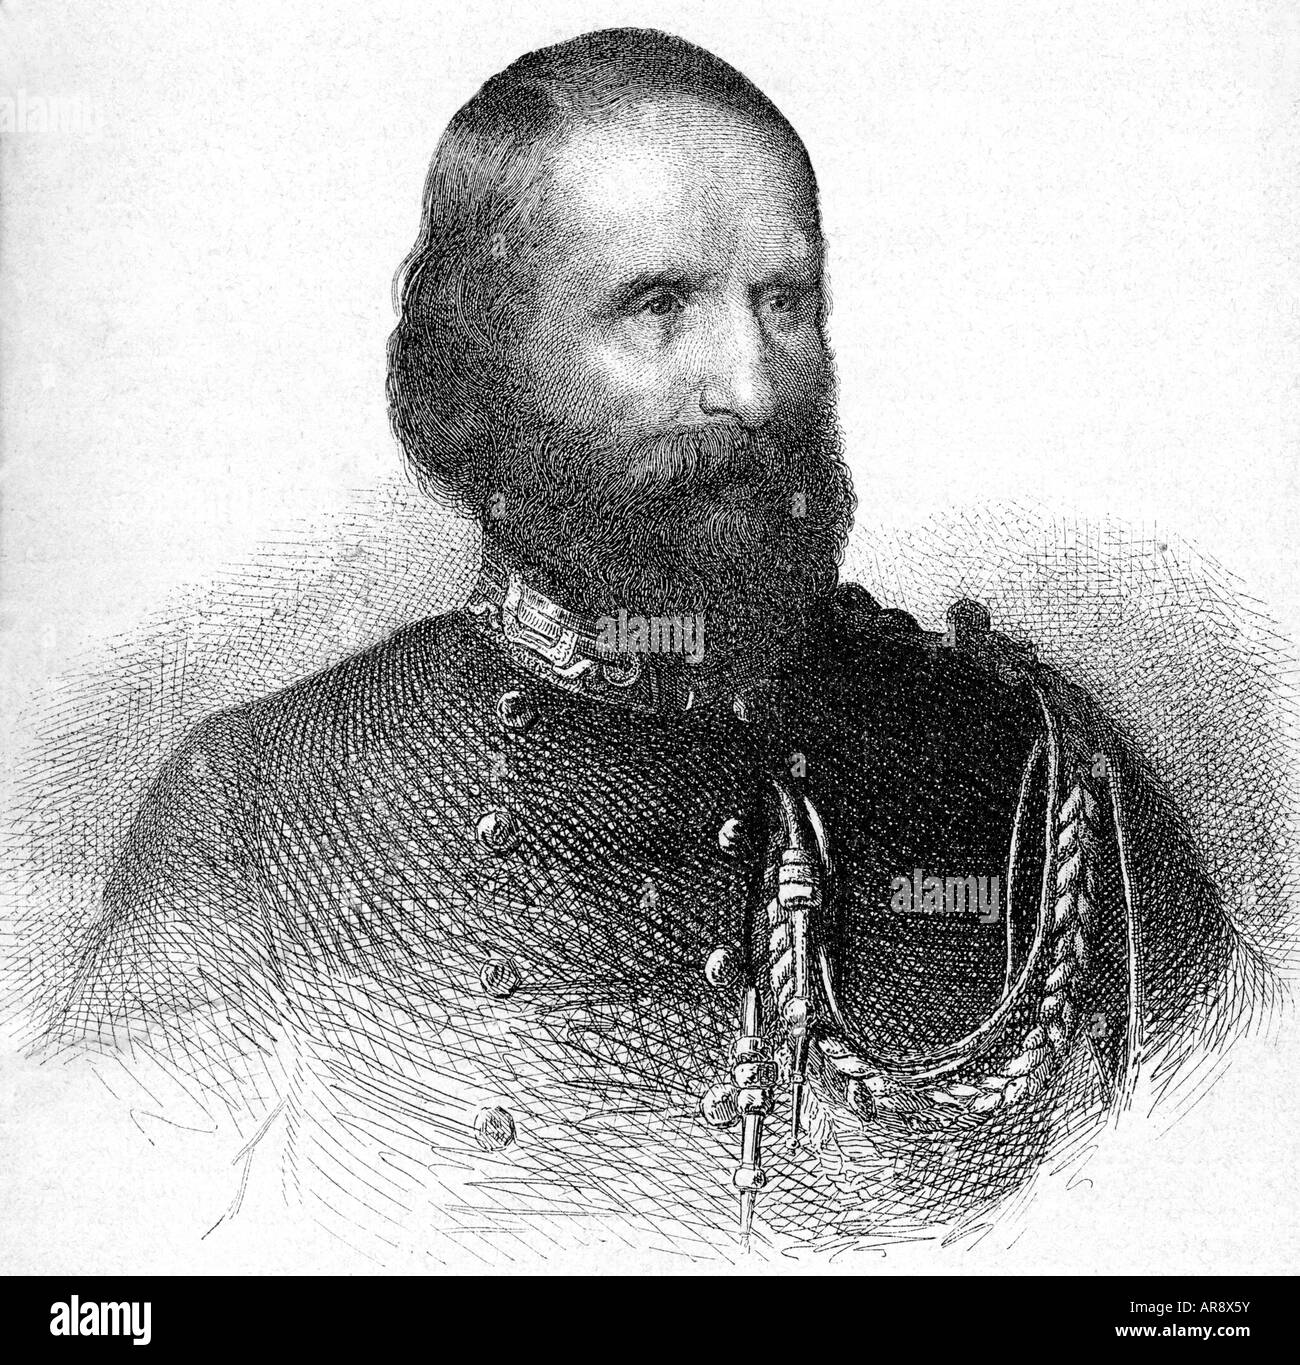 Garibaldi, Giuseppe, 4.7.1807 - 2.6.1882, Italian freedomfighter, portrait, after engraving by Metzmacher, 19th century, Stock Photo